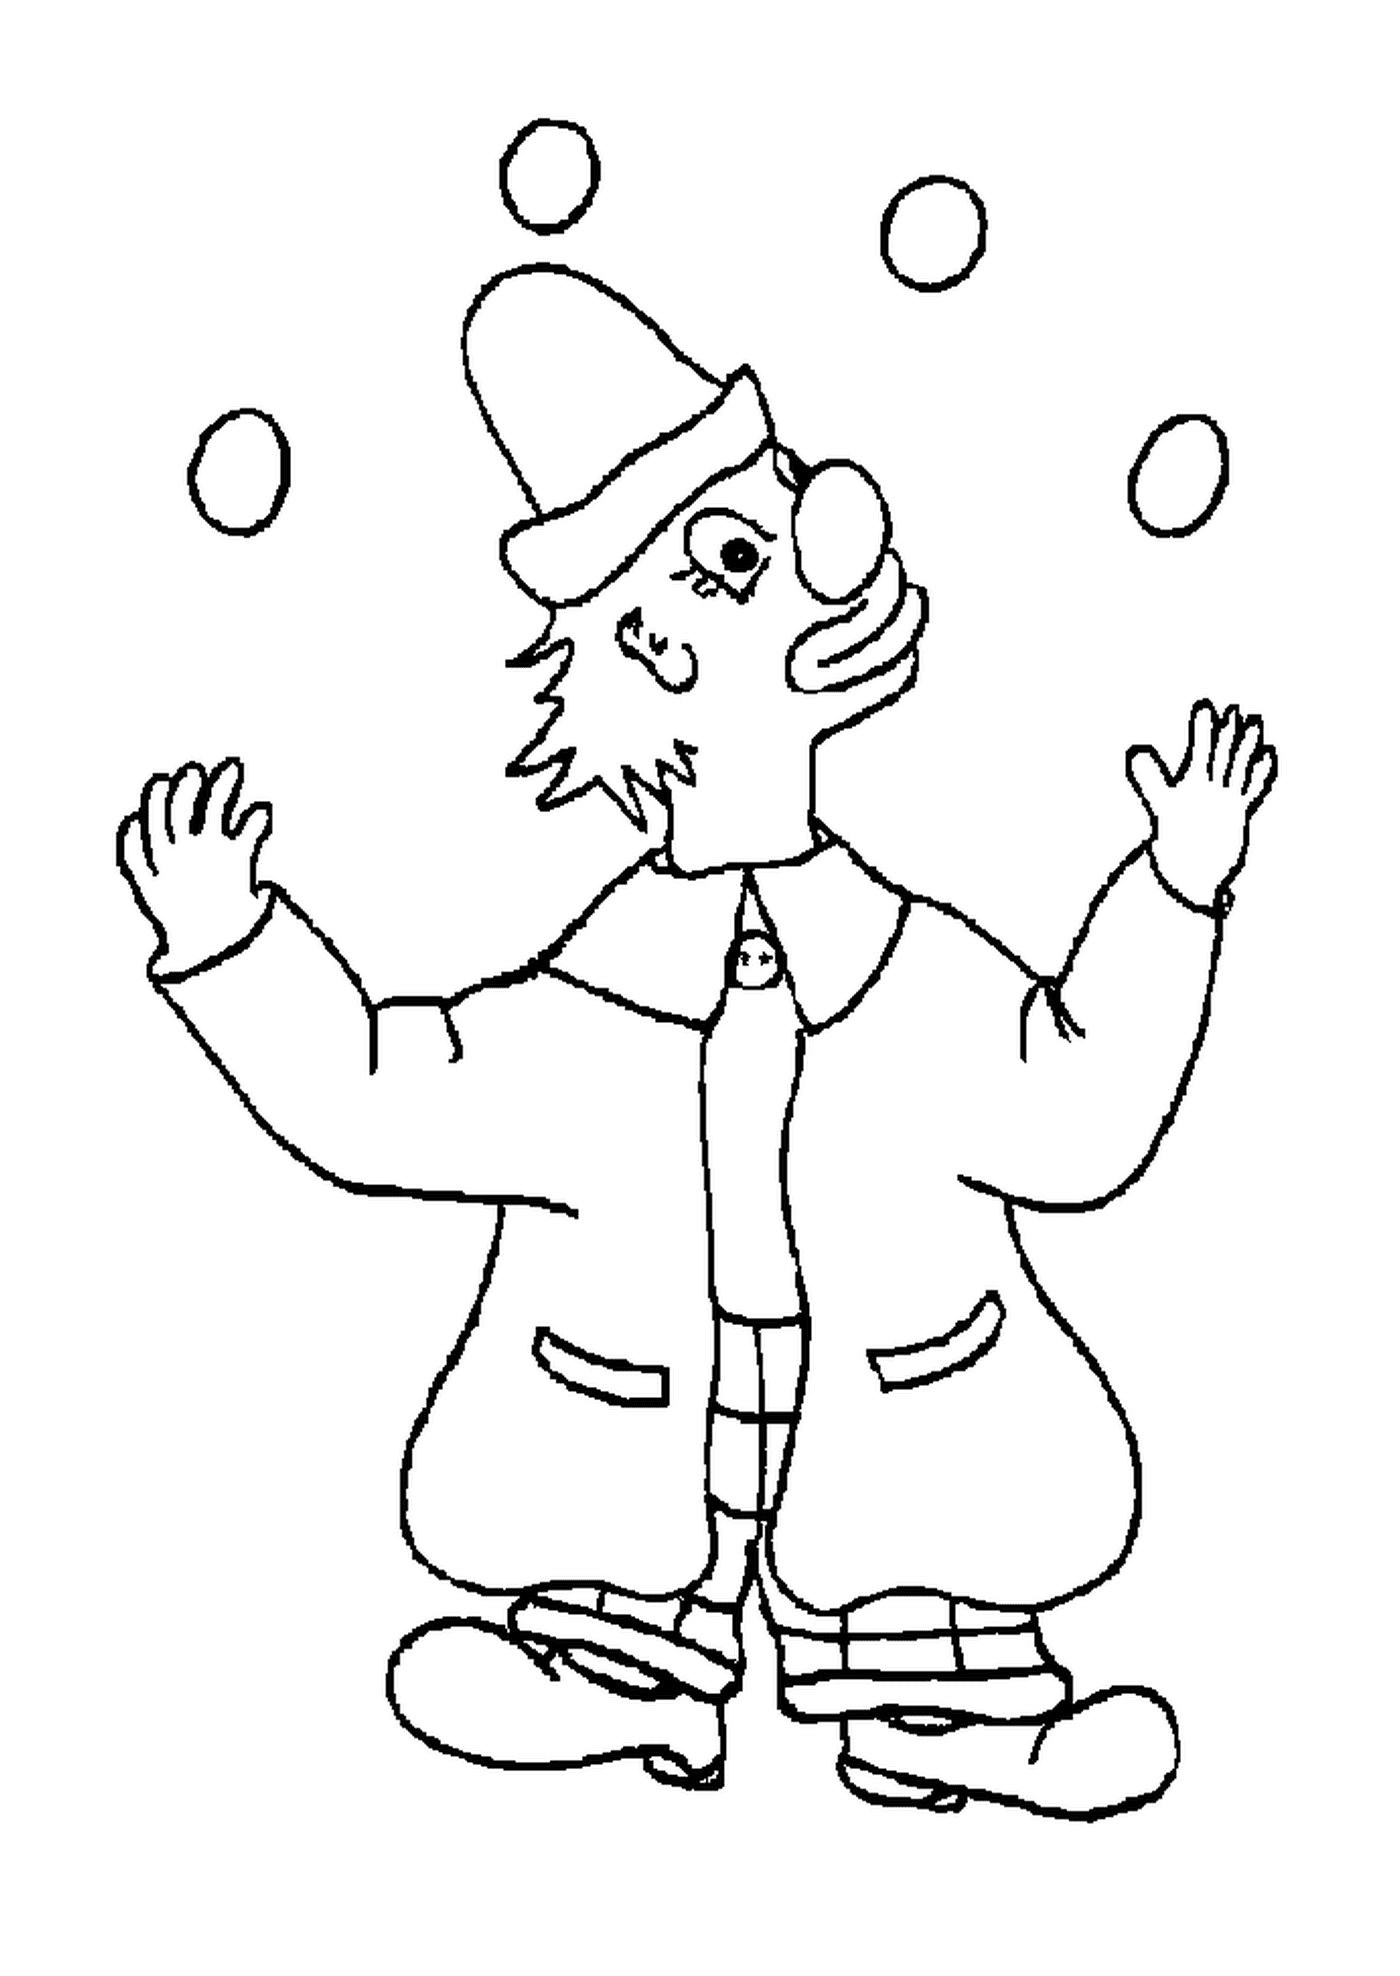  Клоун жонглирует яйцами для цирка 